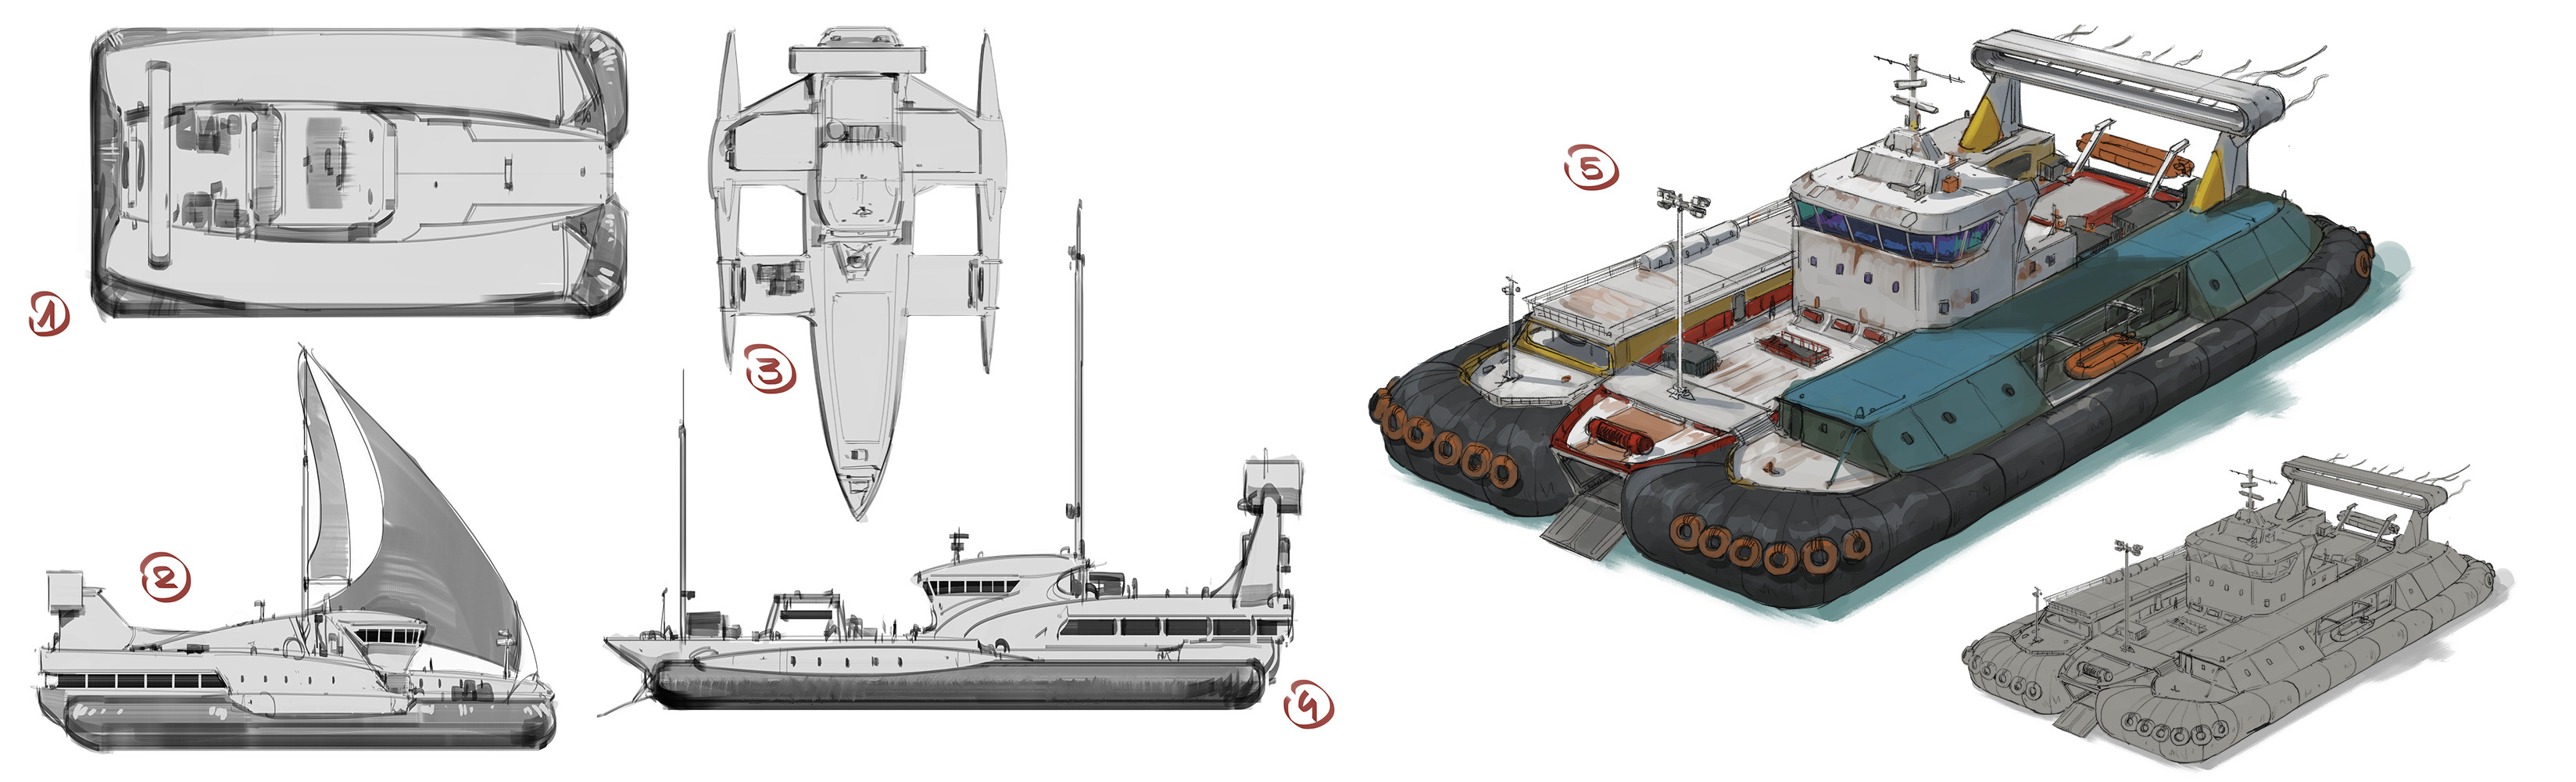 RaftBoat sketches